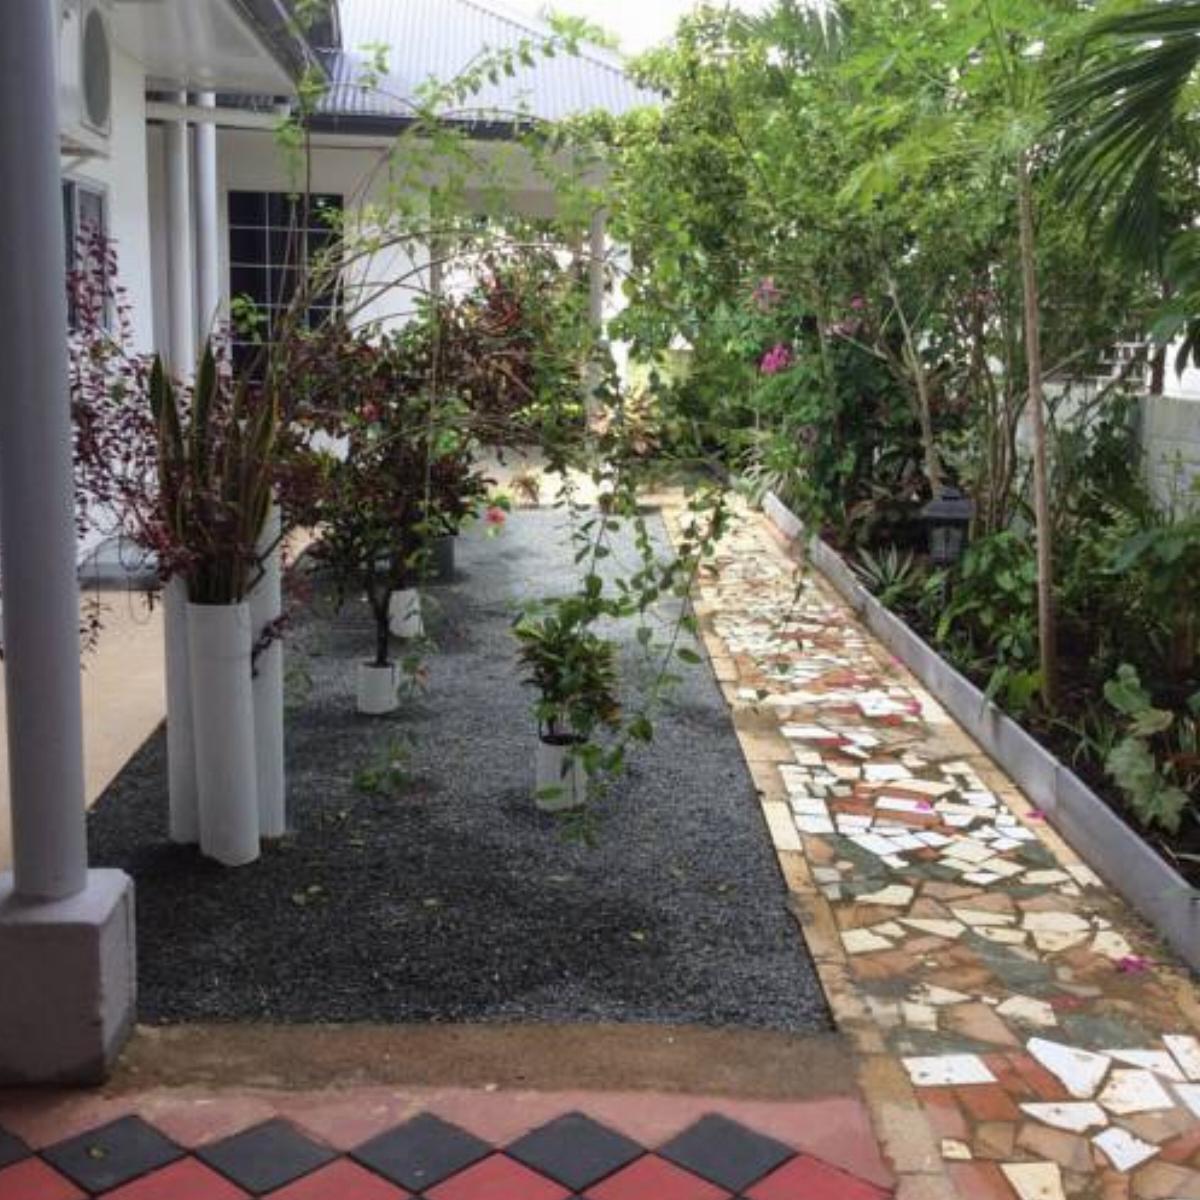 Oleander Hotel Jagtlust Suriname